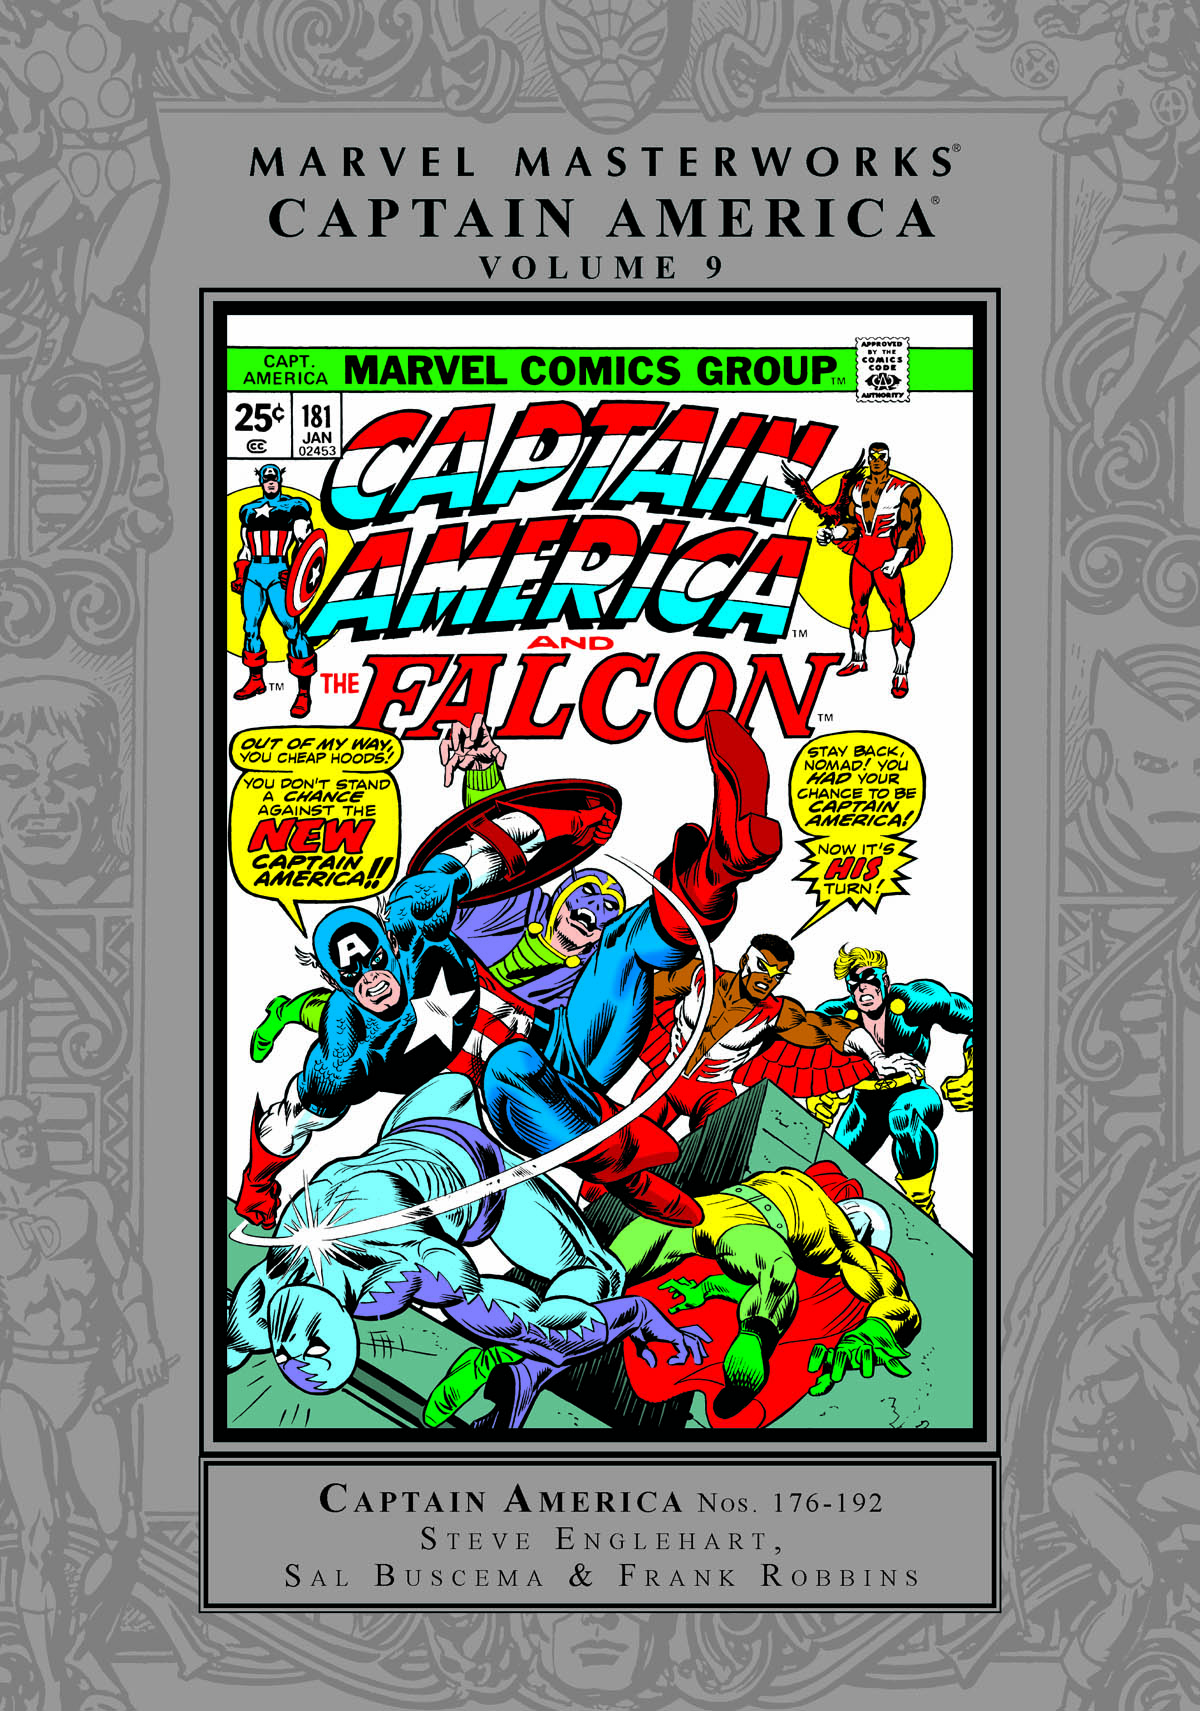 Marvel Masterworks: Captain America Vol. 9 (Trade Paperback)